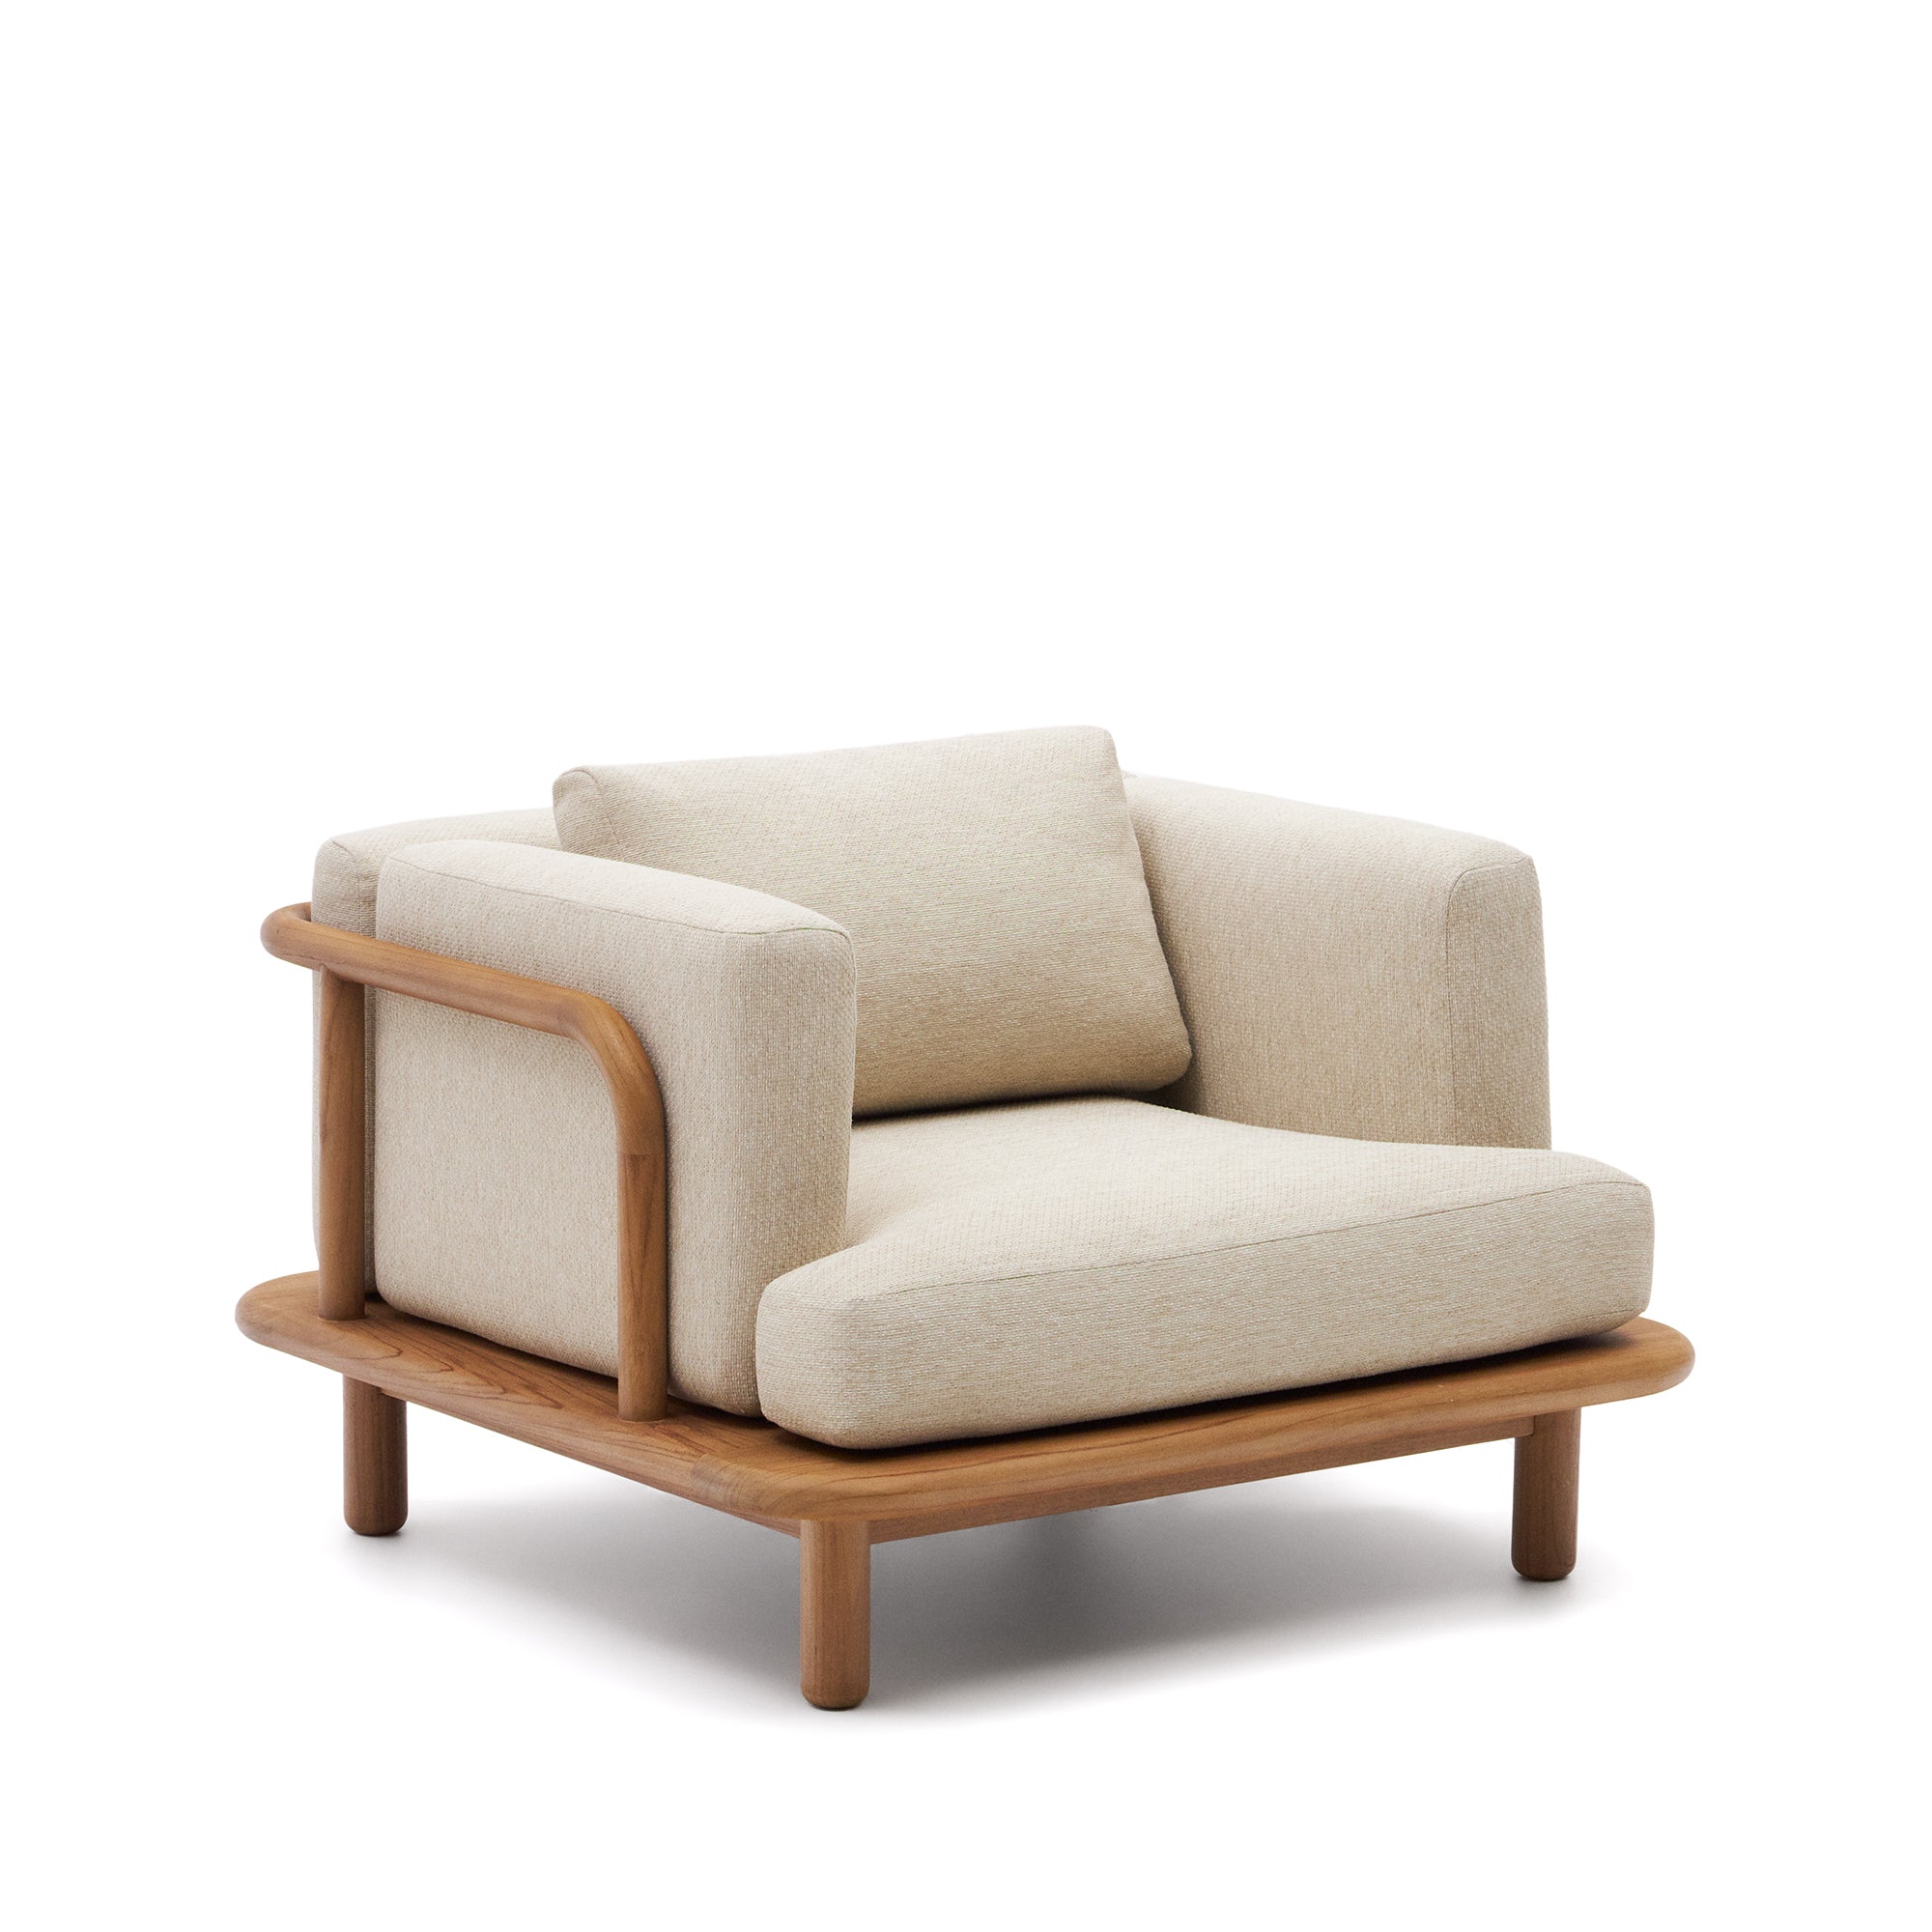 Turqueta armchair, made of solid teak wood, 100% FSC